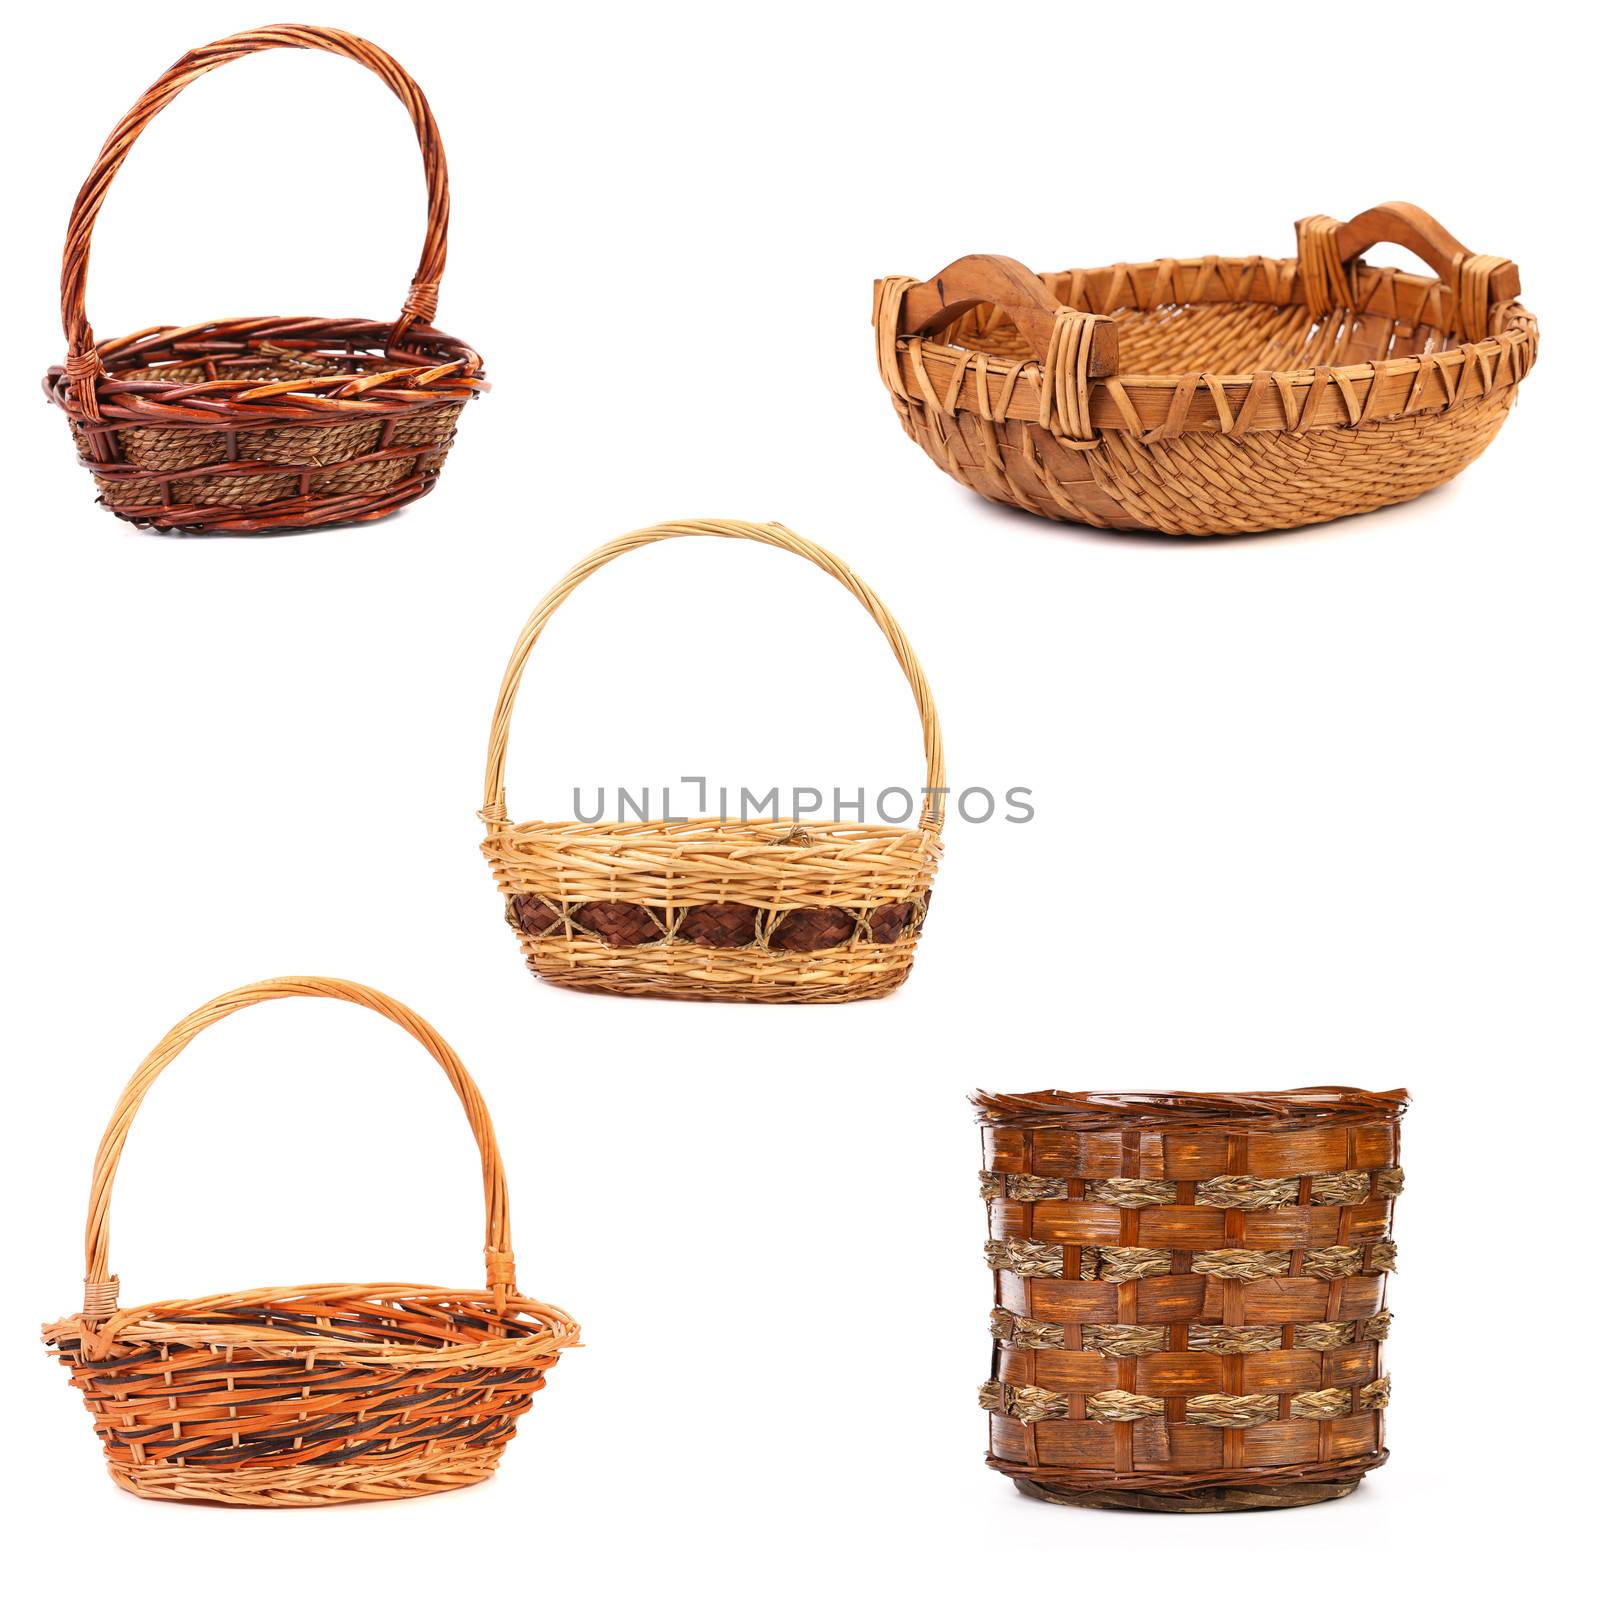 Vintage weave wicker baskets by indigolotos